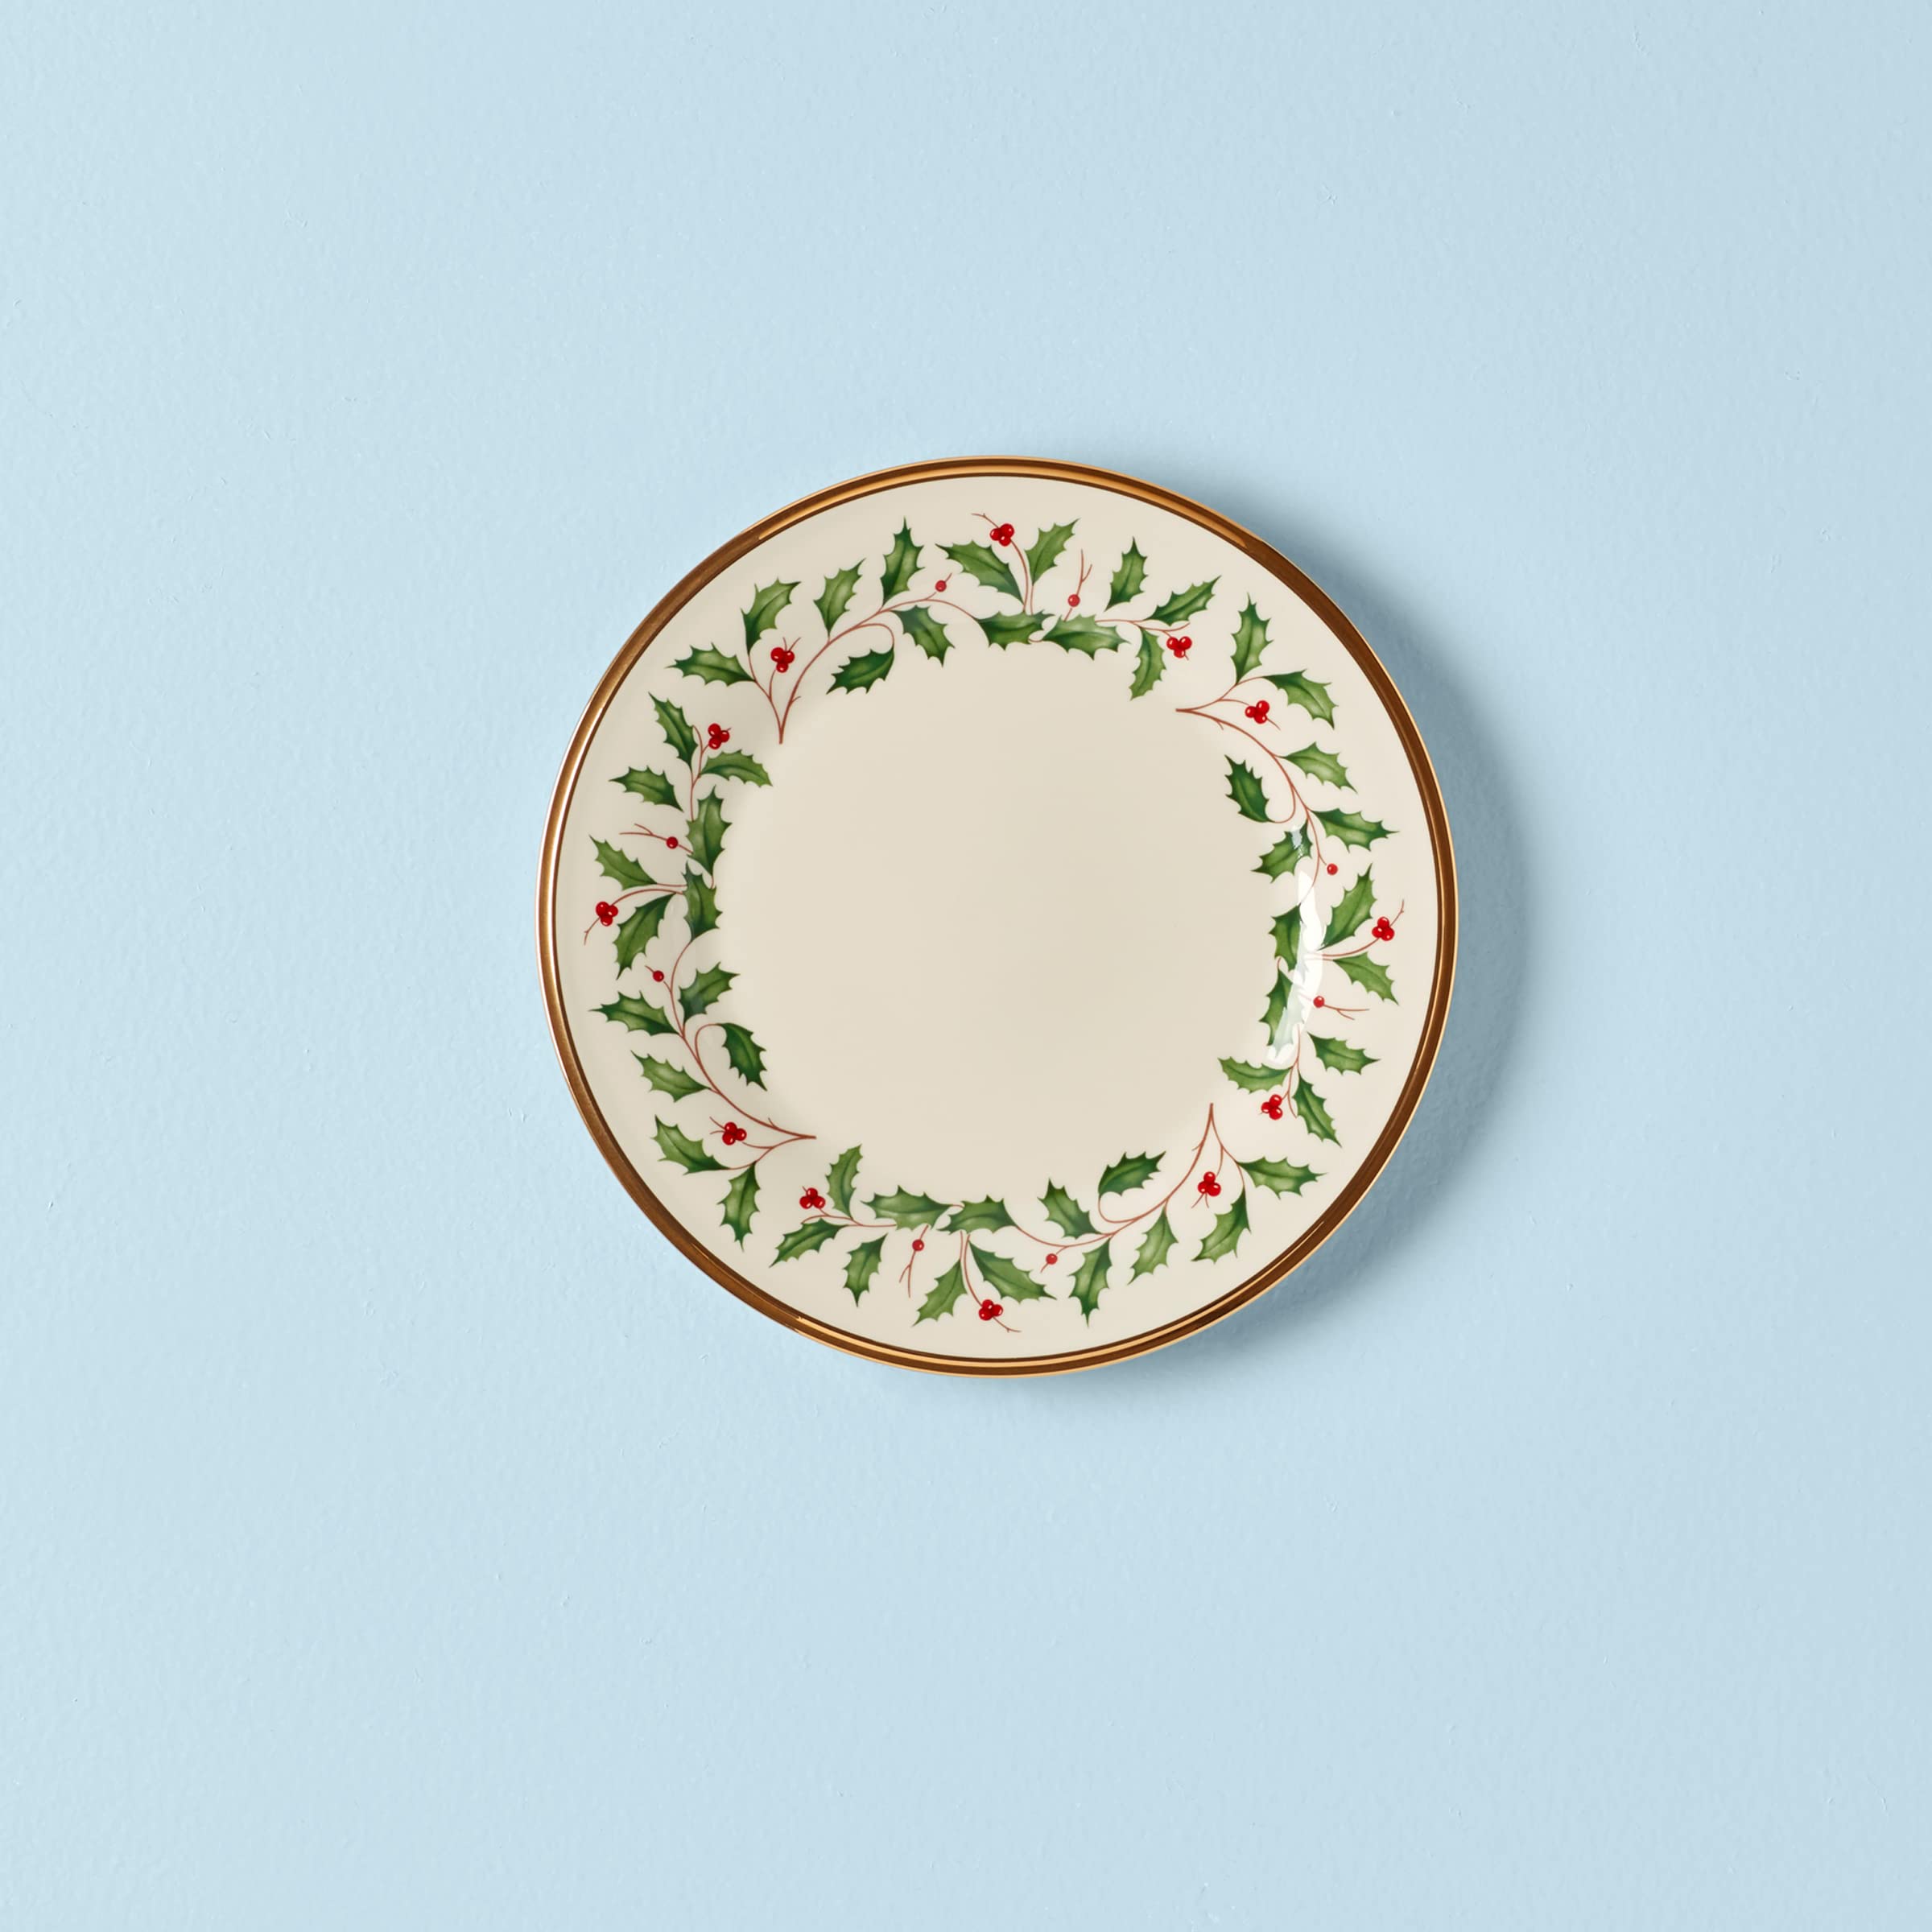 Lenox 146504010 Holiday Salad Plate